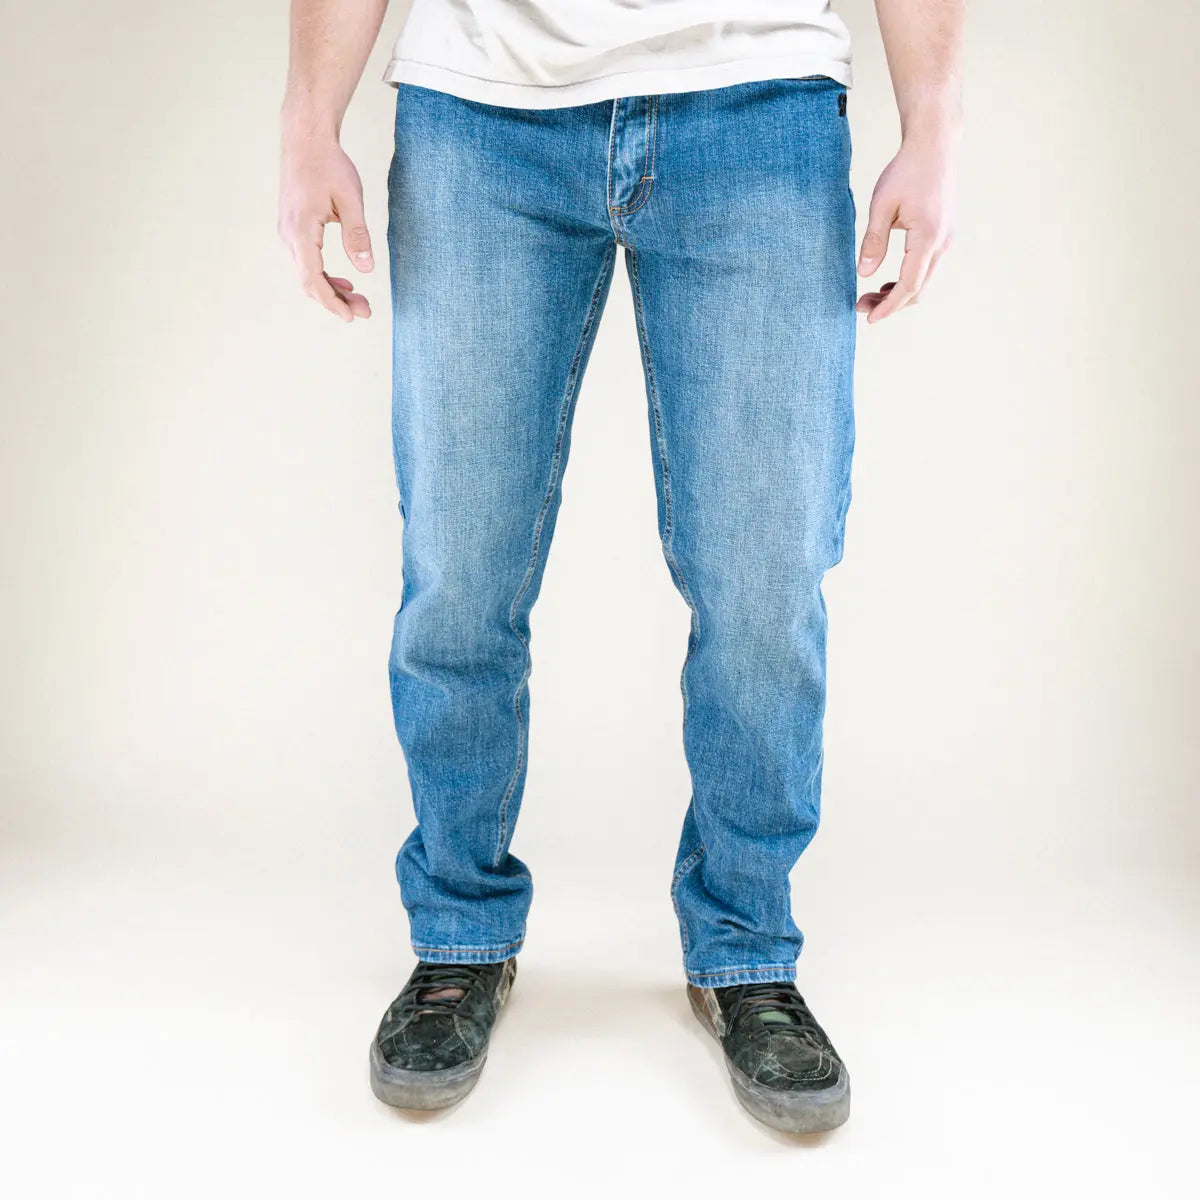 NEWGROUPMAREK [GMK] Brushed Rugged Jeans パンツ